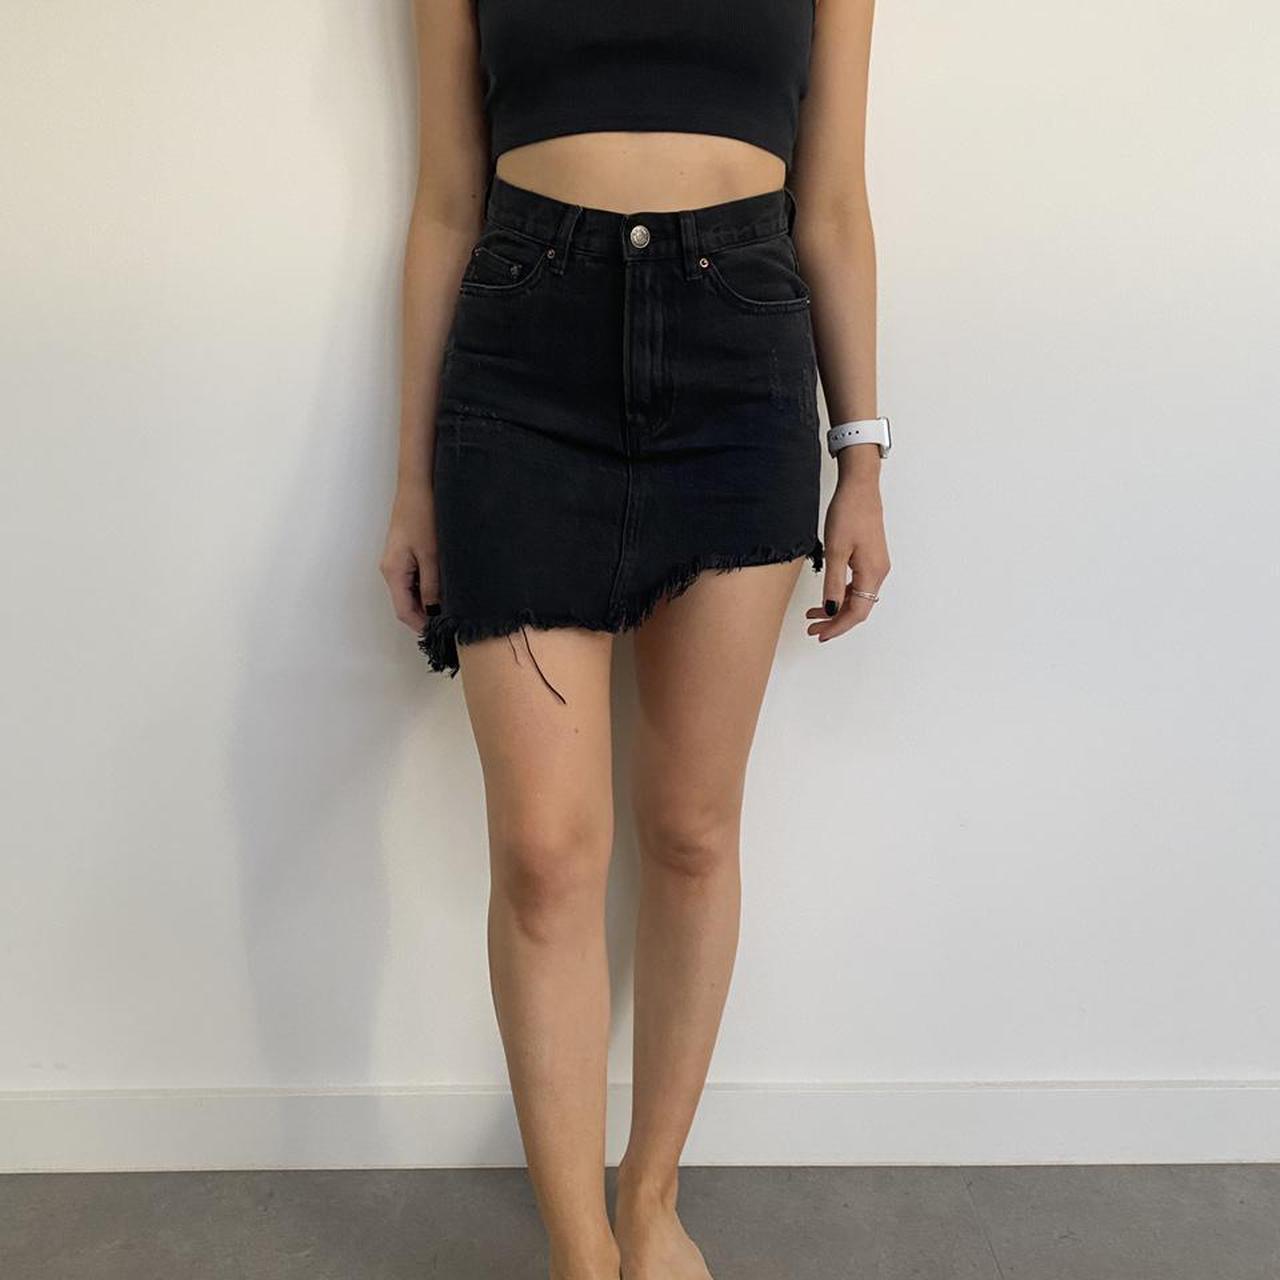 Asymmetric denim skirt. Black and high-waisted - Depop